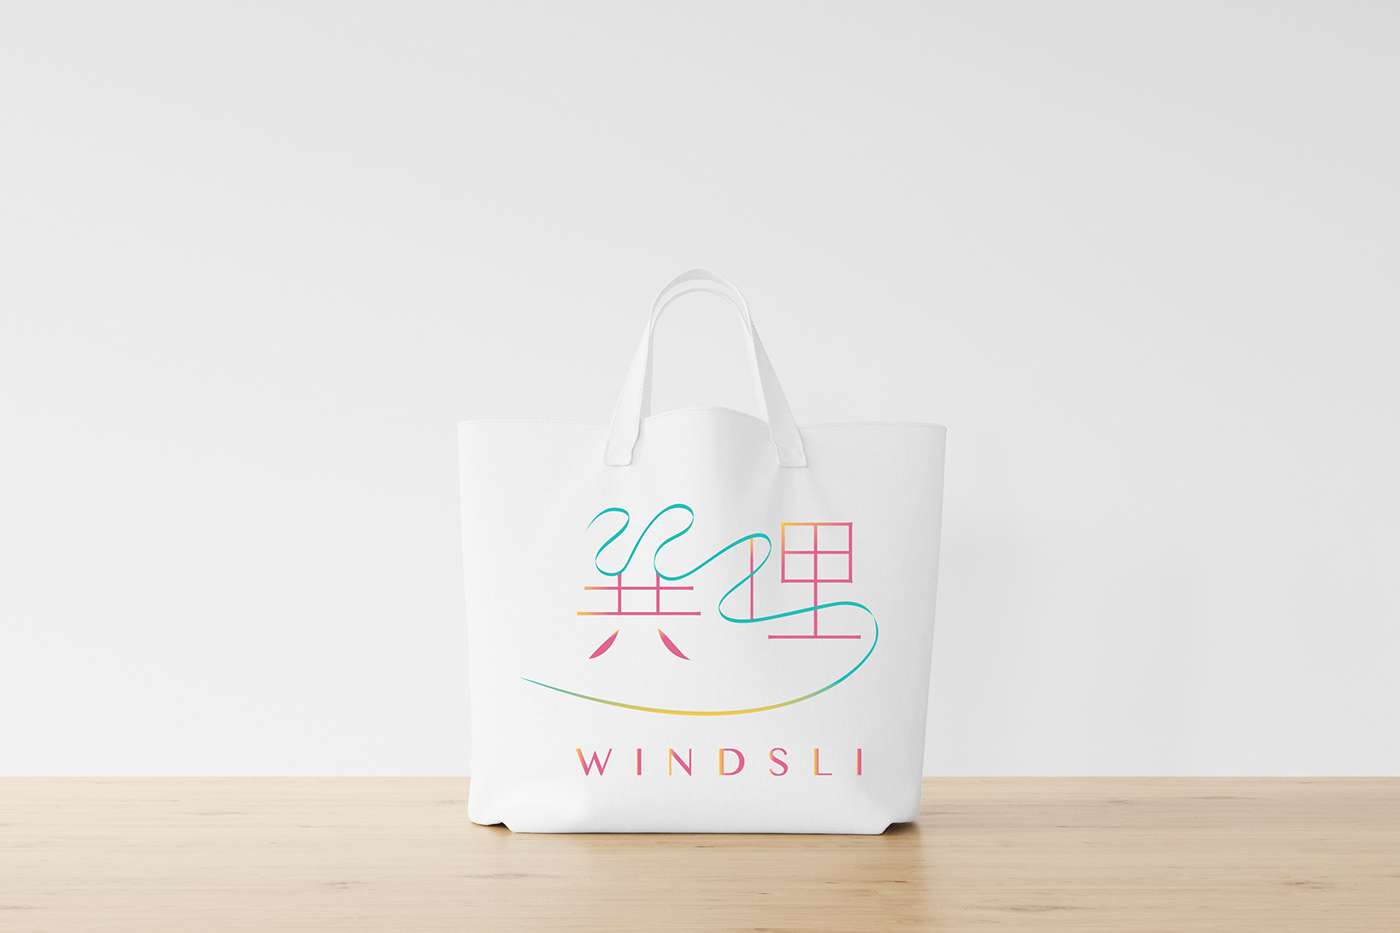 chinese characters minimalist 
logo design